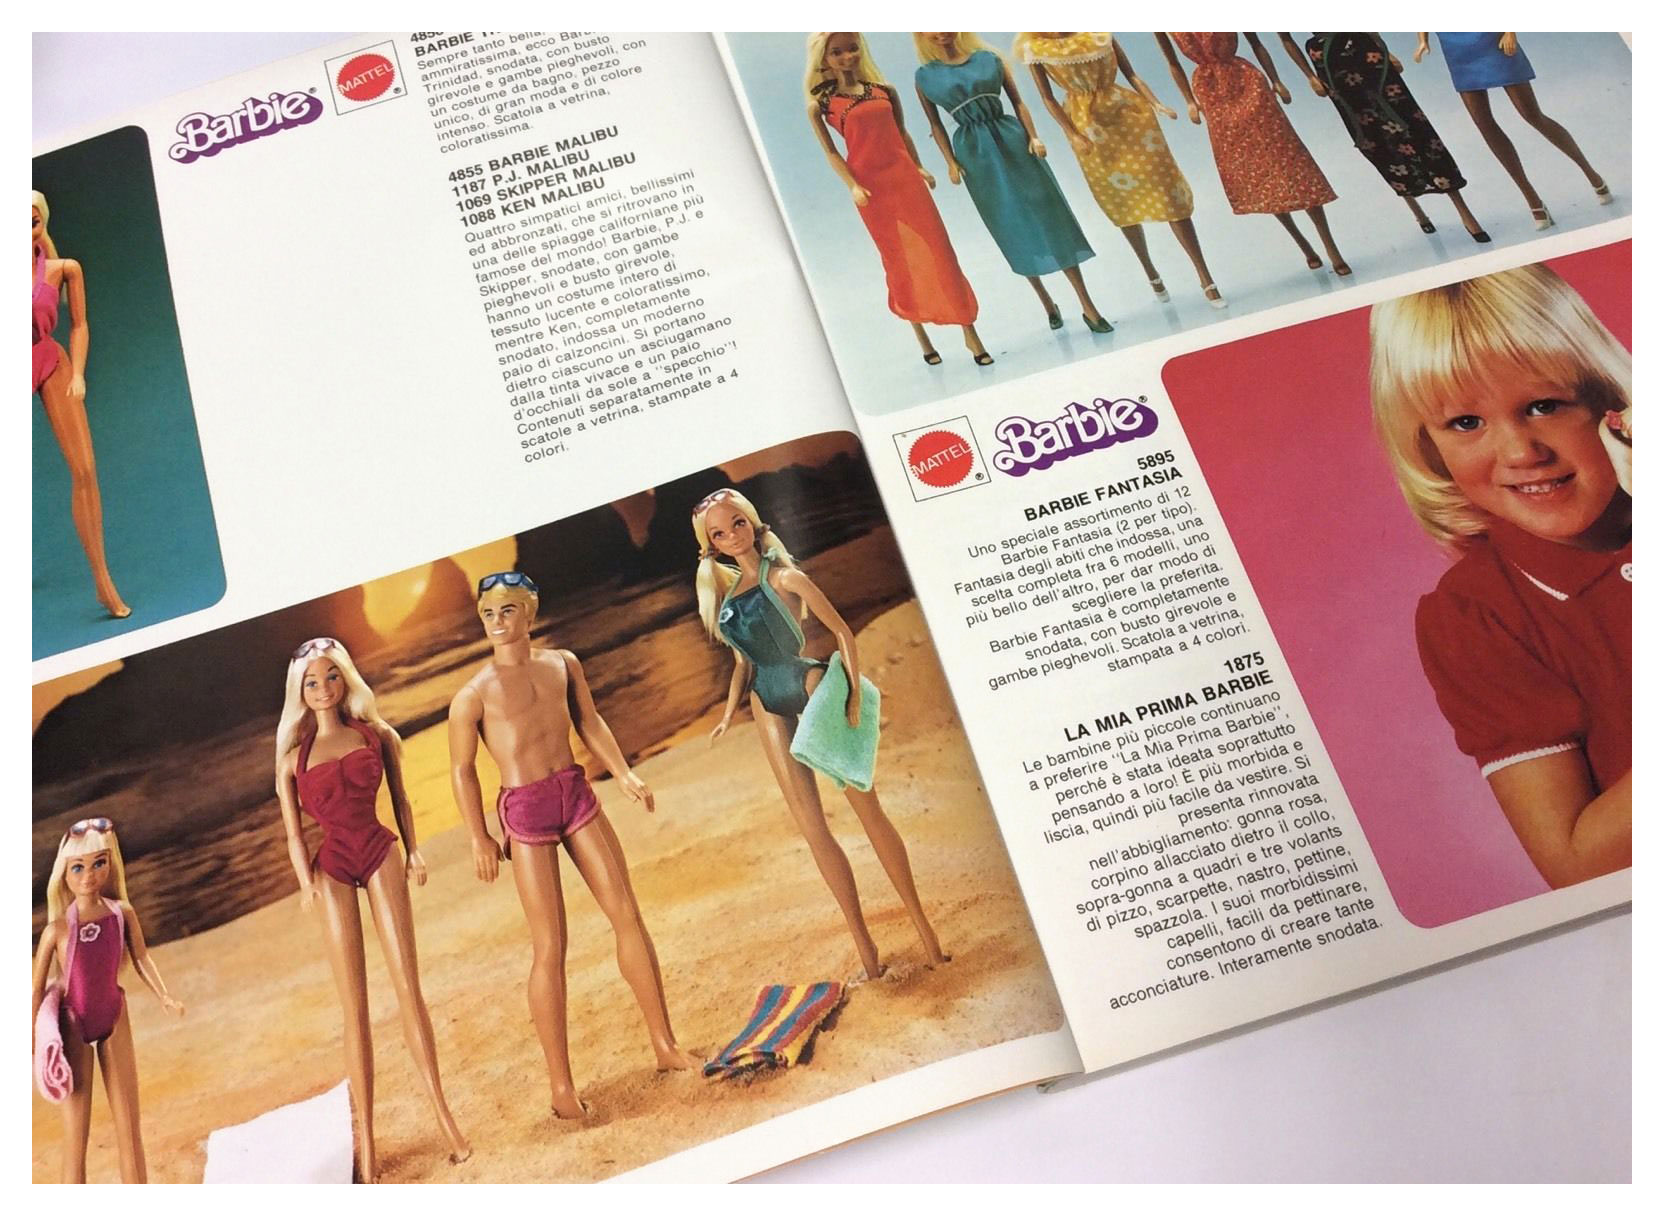 From 1983 Italian Mattel catalogue